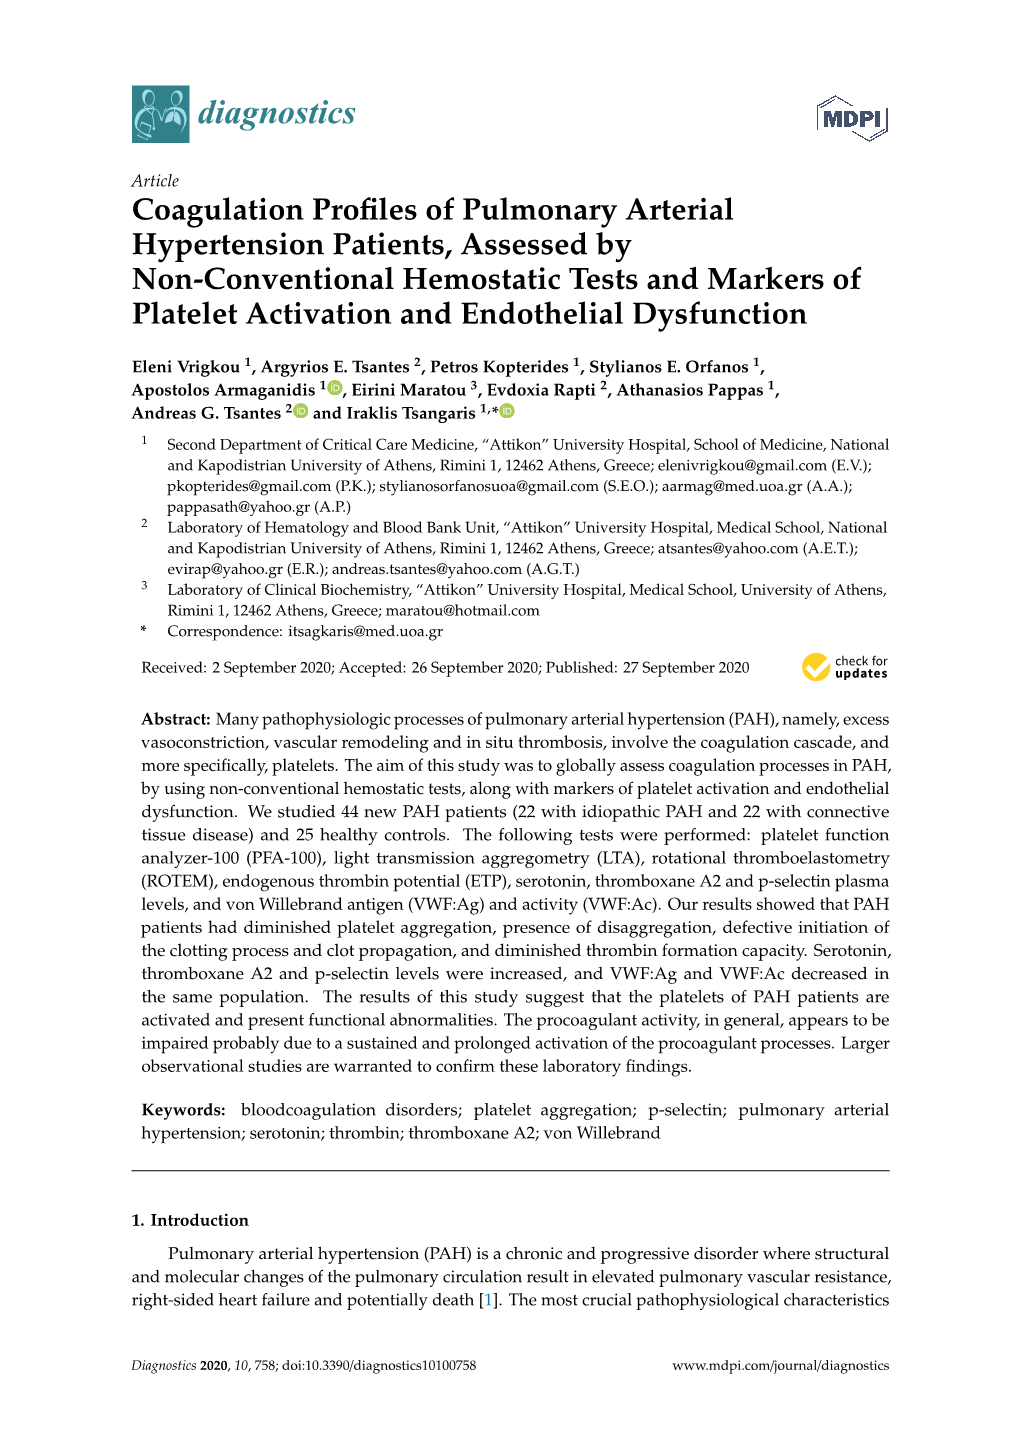 Coagulation Profiles of Pulmonary Arterial Hypertension Patients